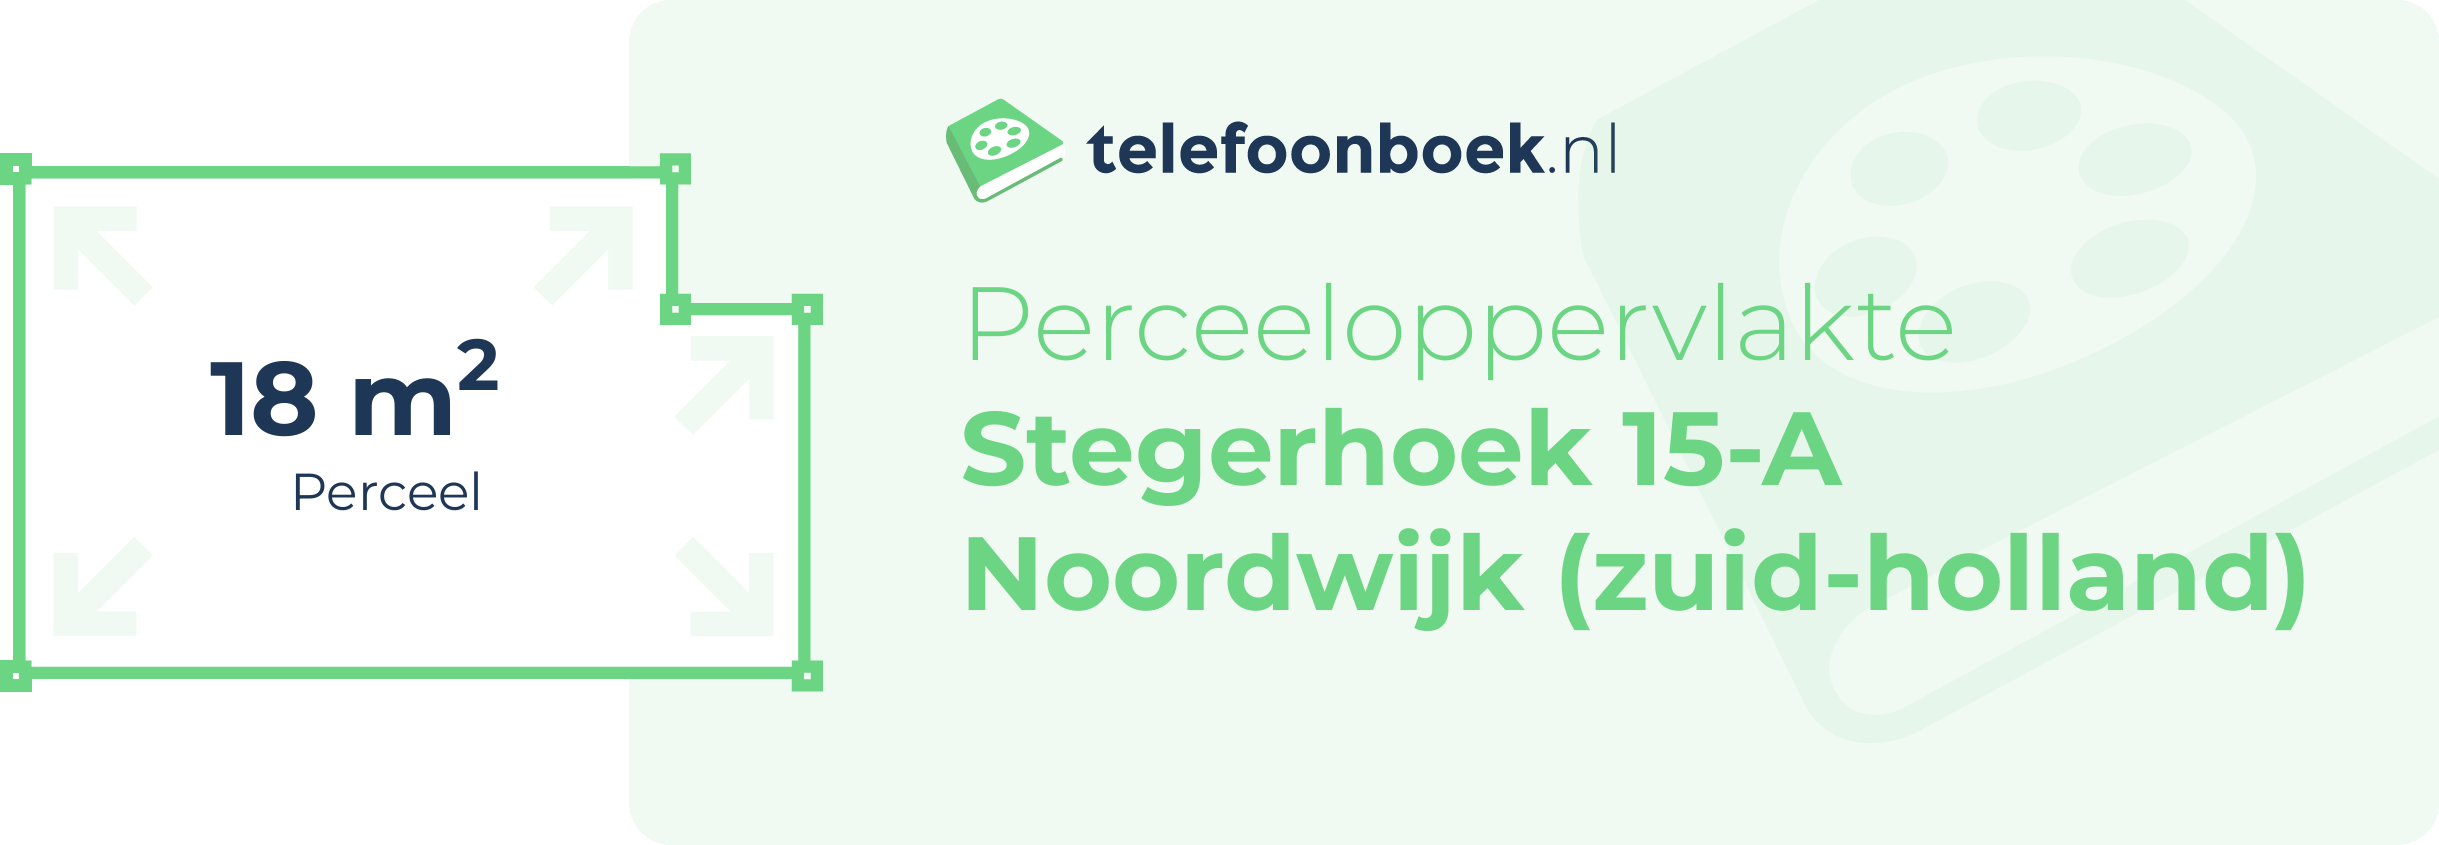 Perceeloppervlakte Stegerhoek 15-A Noordwijk (Zuid-Holland)